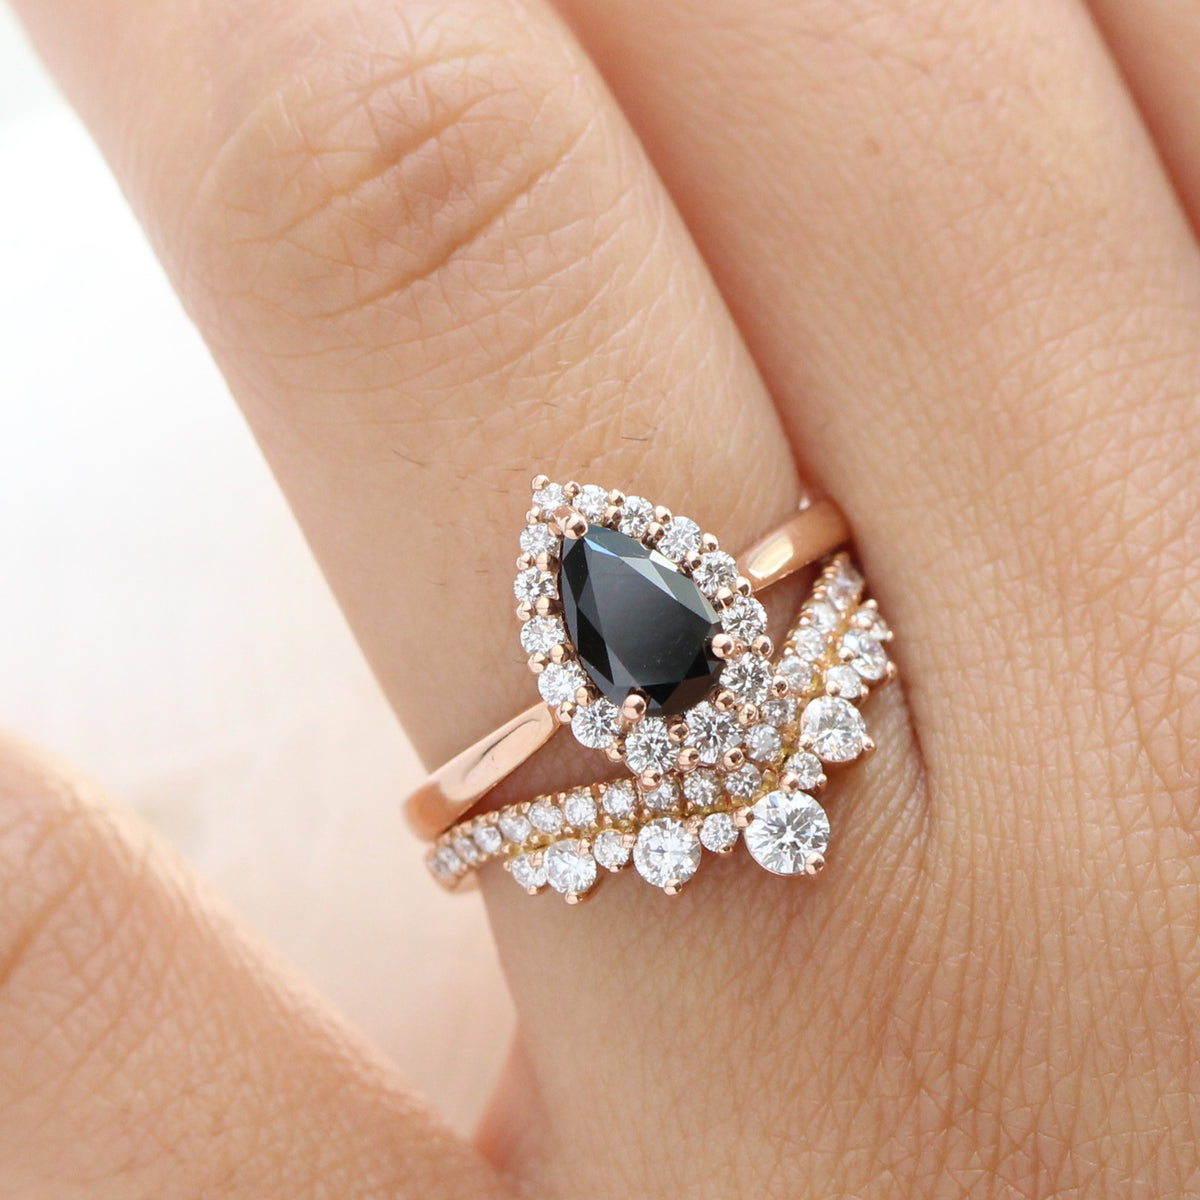 Pear black diamond engagement ring rose gold v shaped diamond wedding band bridal ring set la more design jewelry